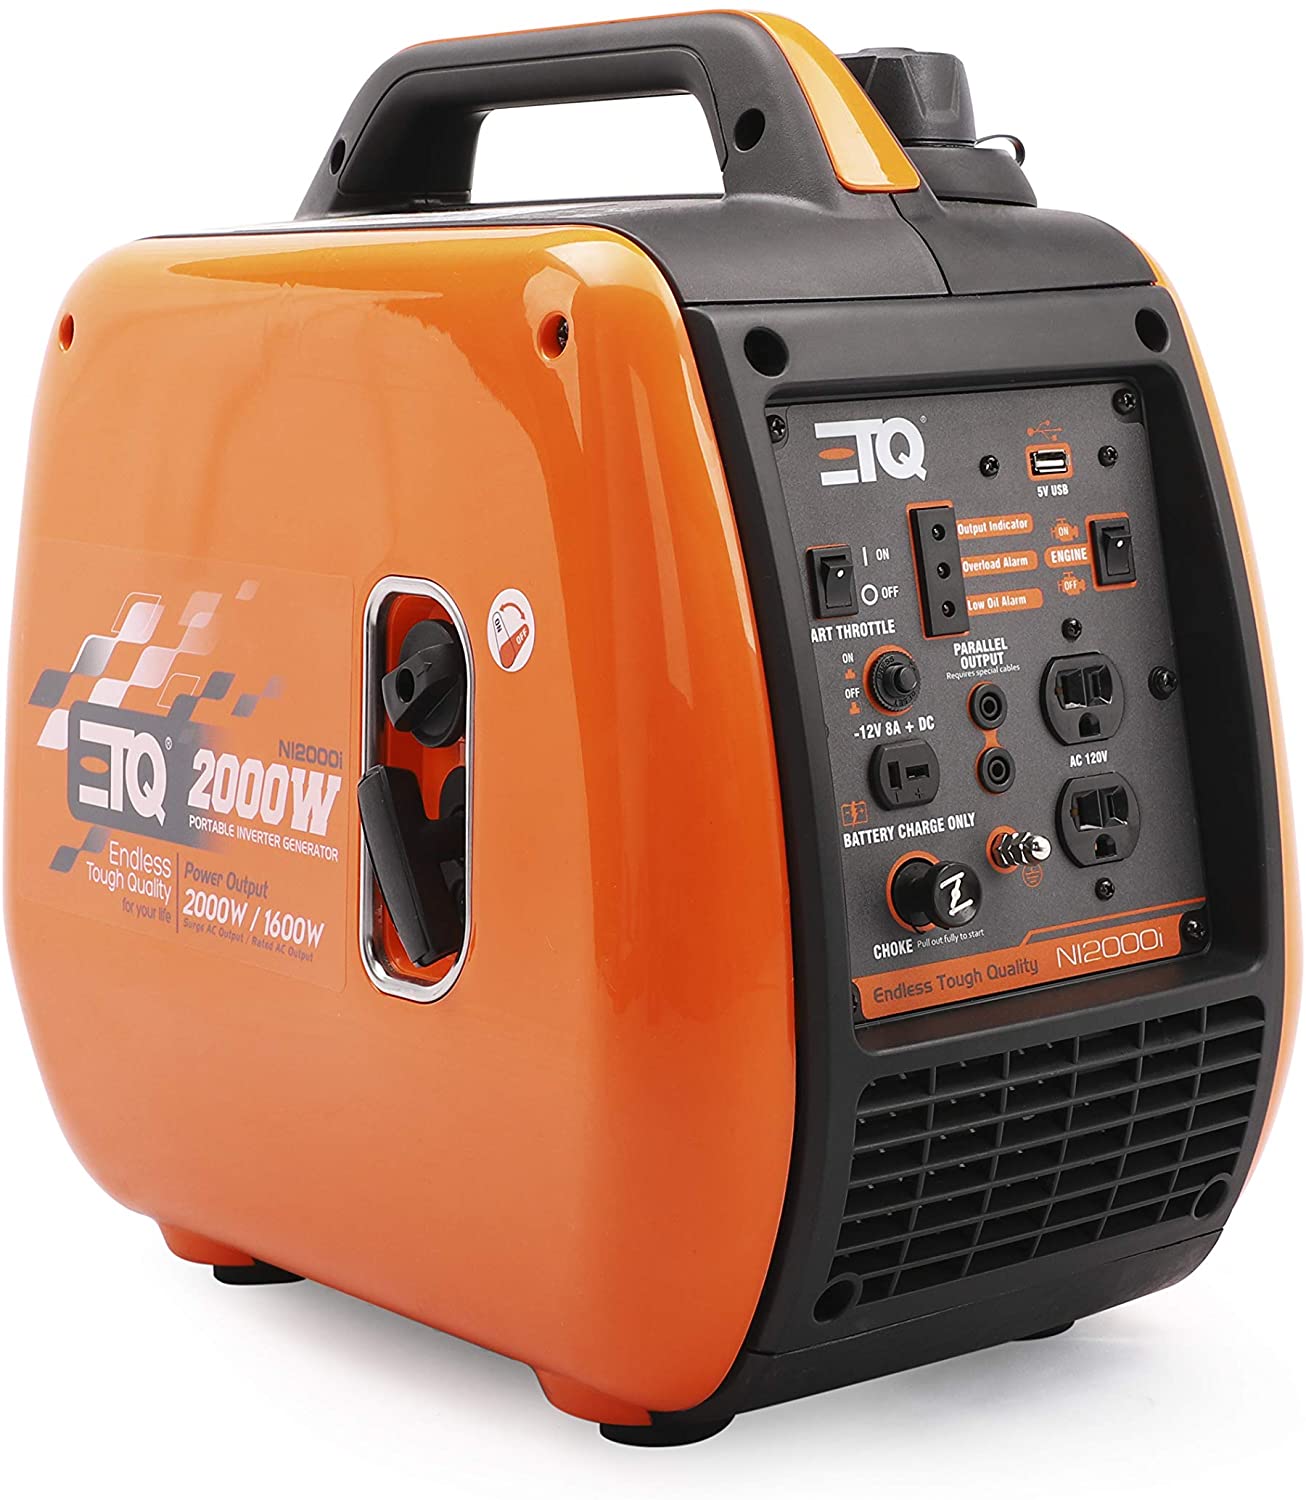 Etq Etq 2000 Inverter Generator